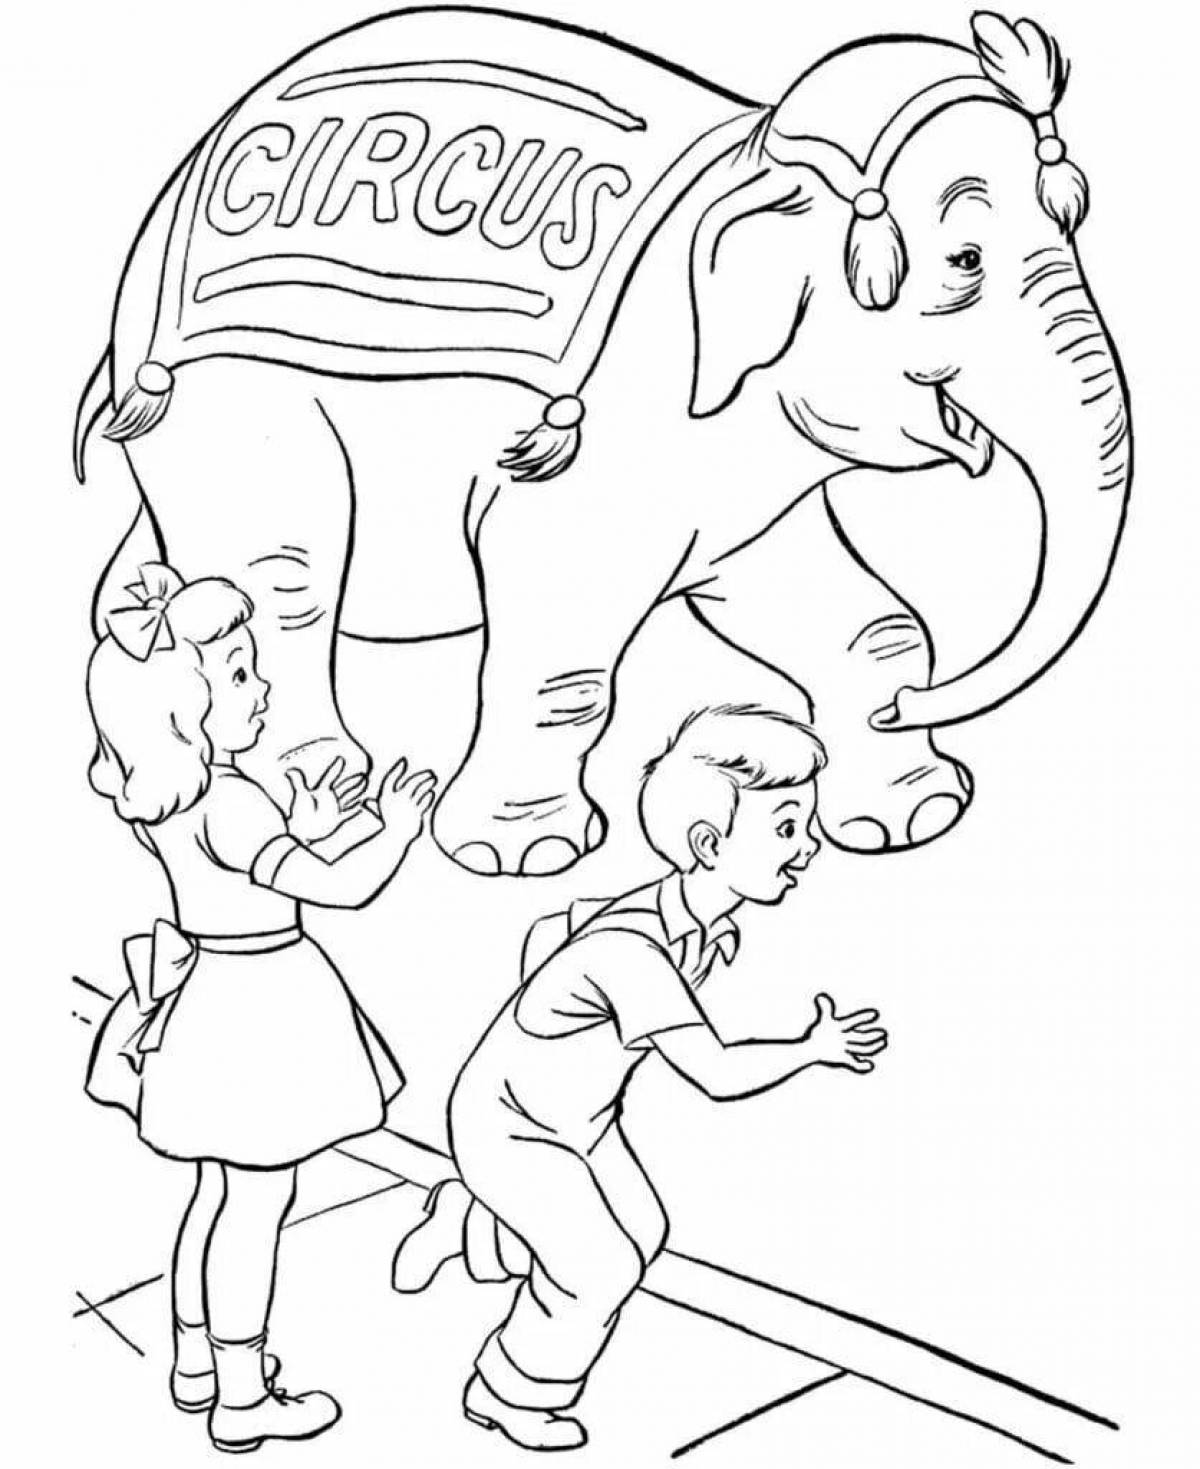 Coloring big circus elephant